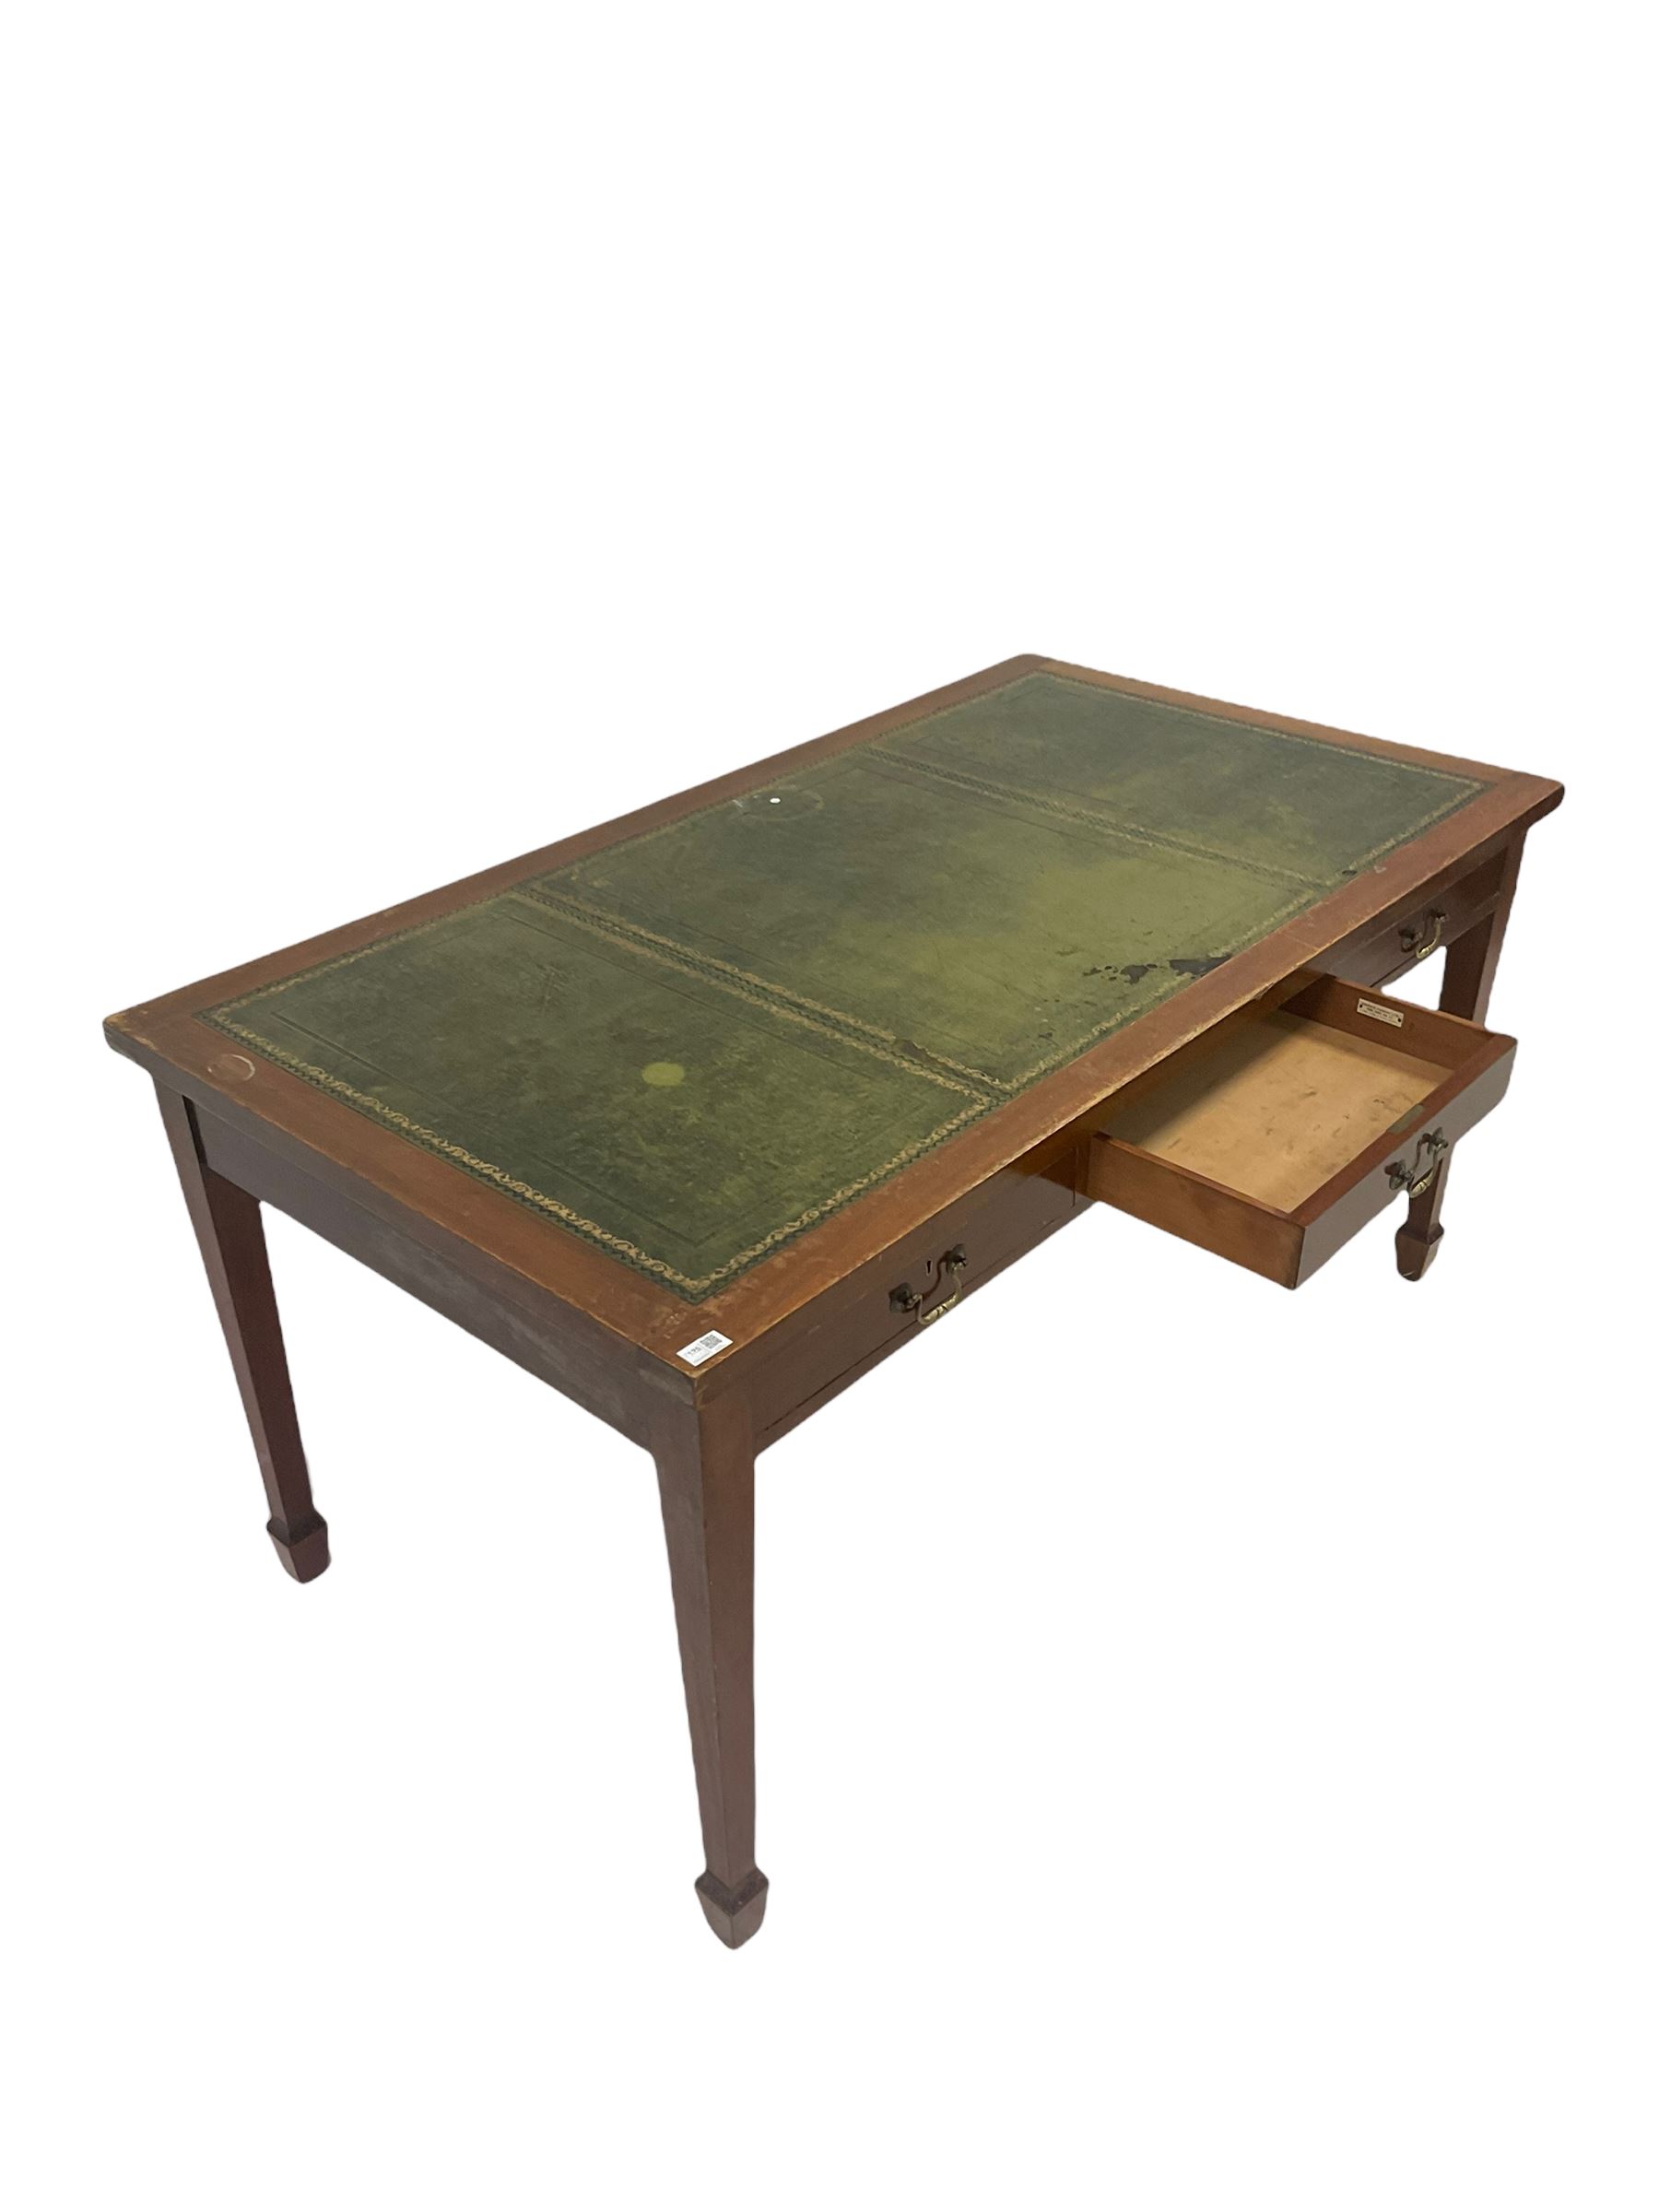 20th century mahogany writing library table - Image 3 of 4